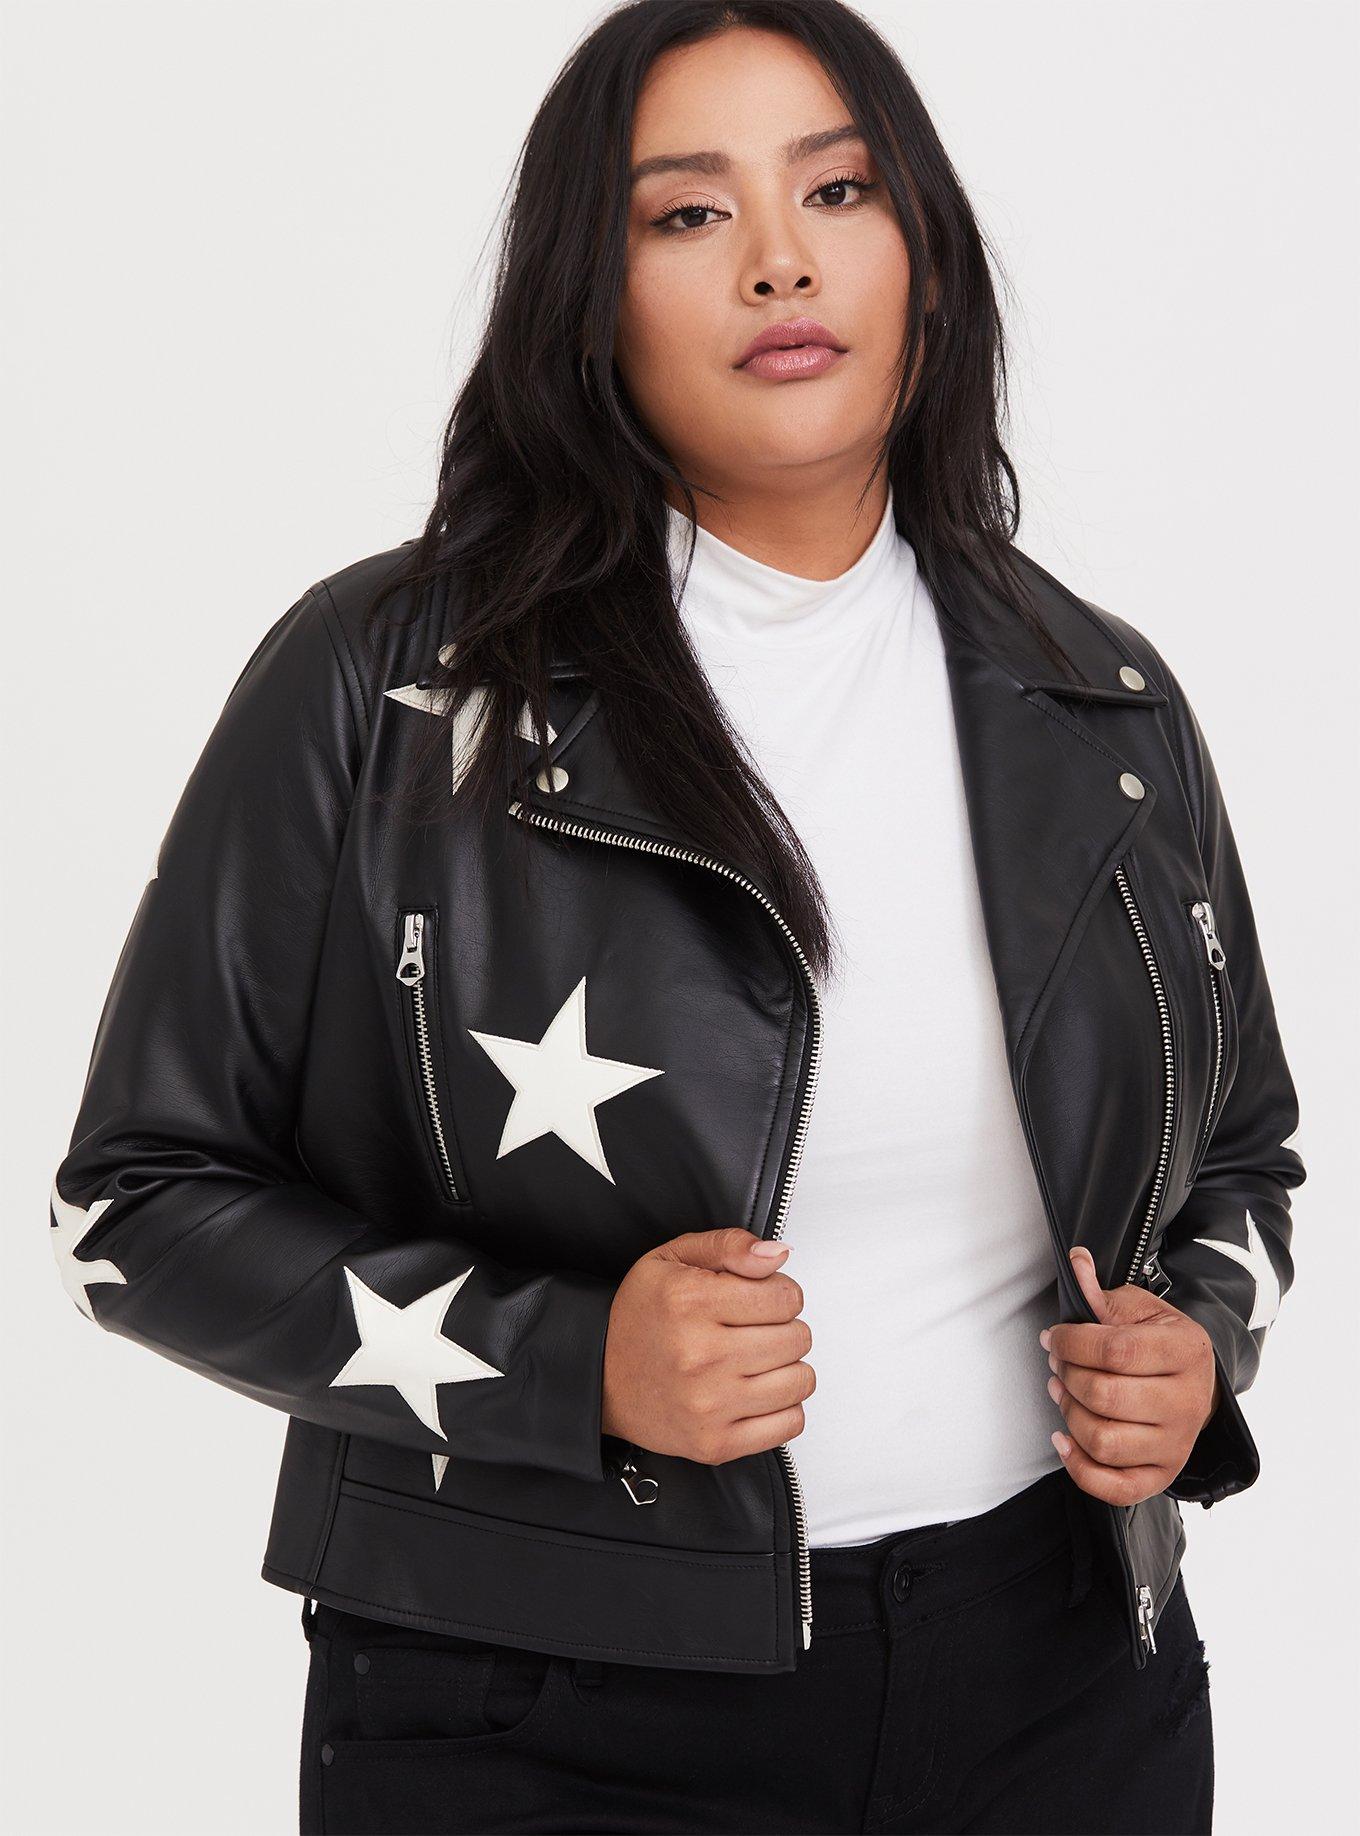 Women's Superstar Faux Leather Jacket in Black/White Size XL by Fashion Nova